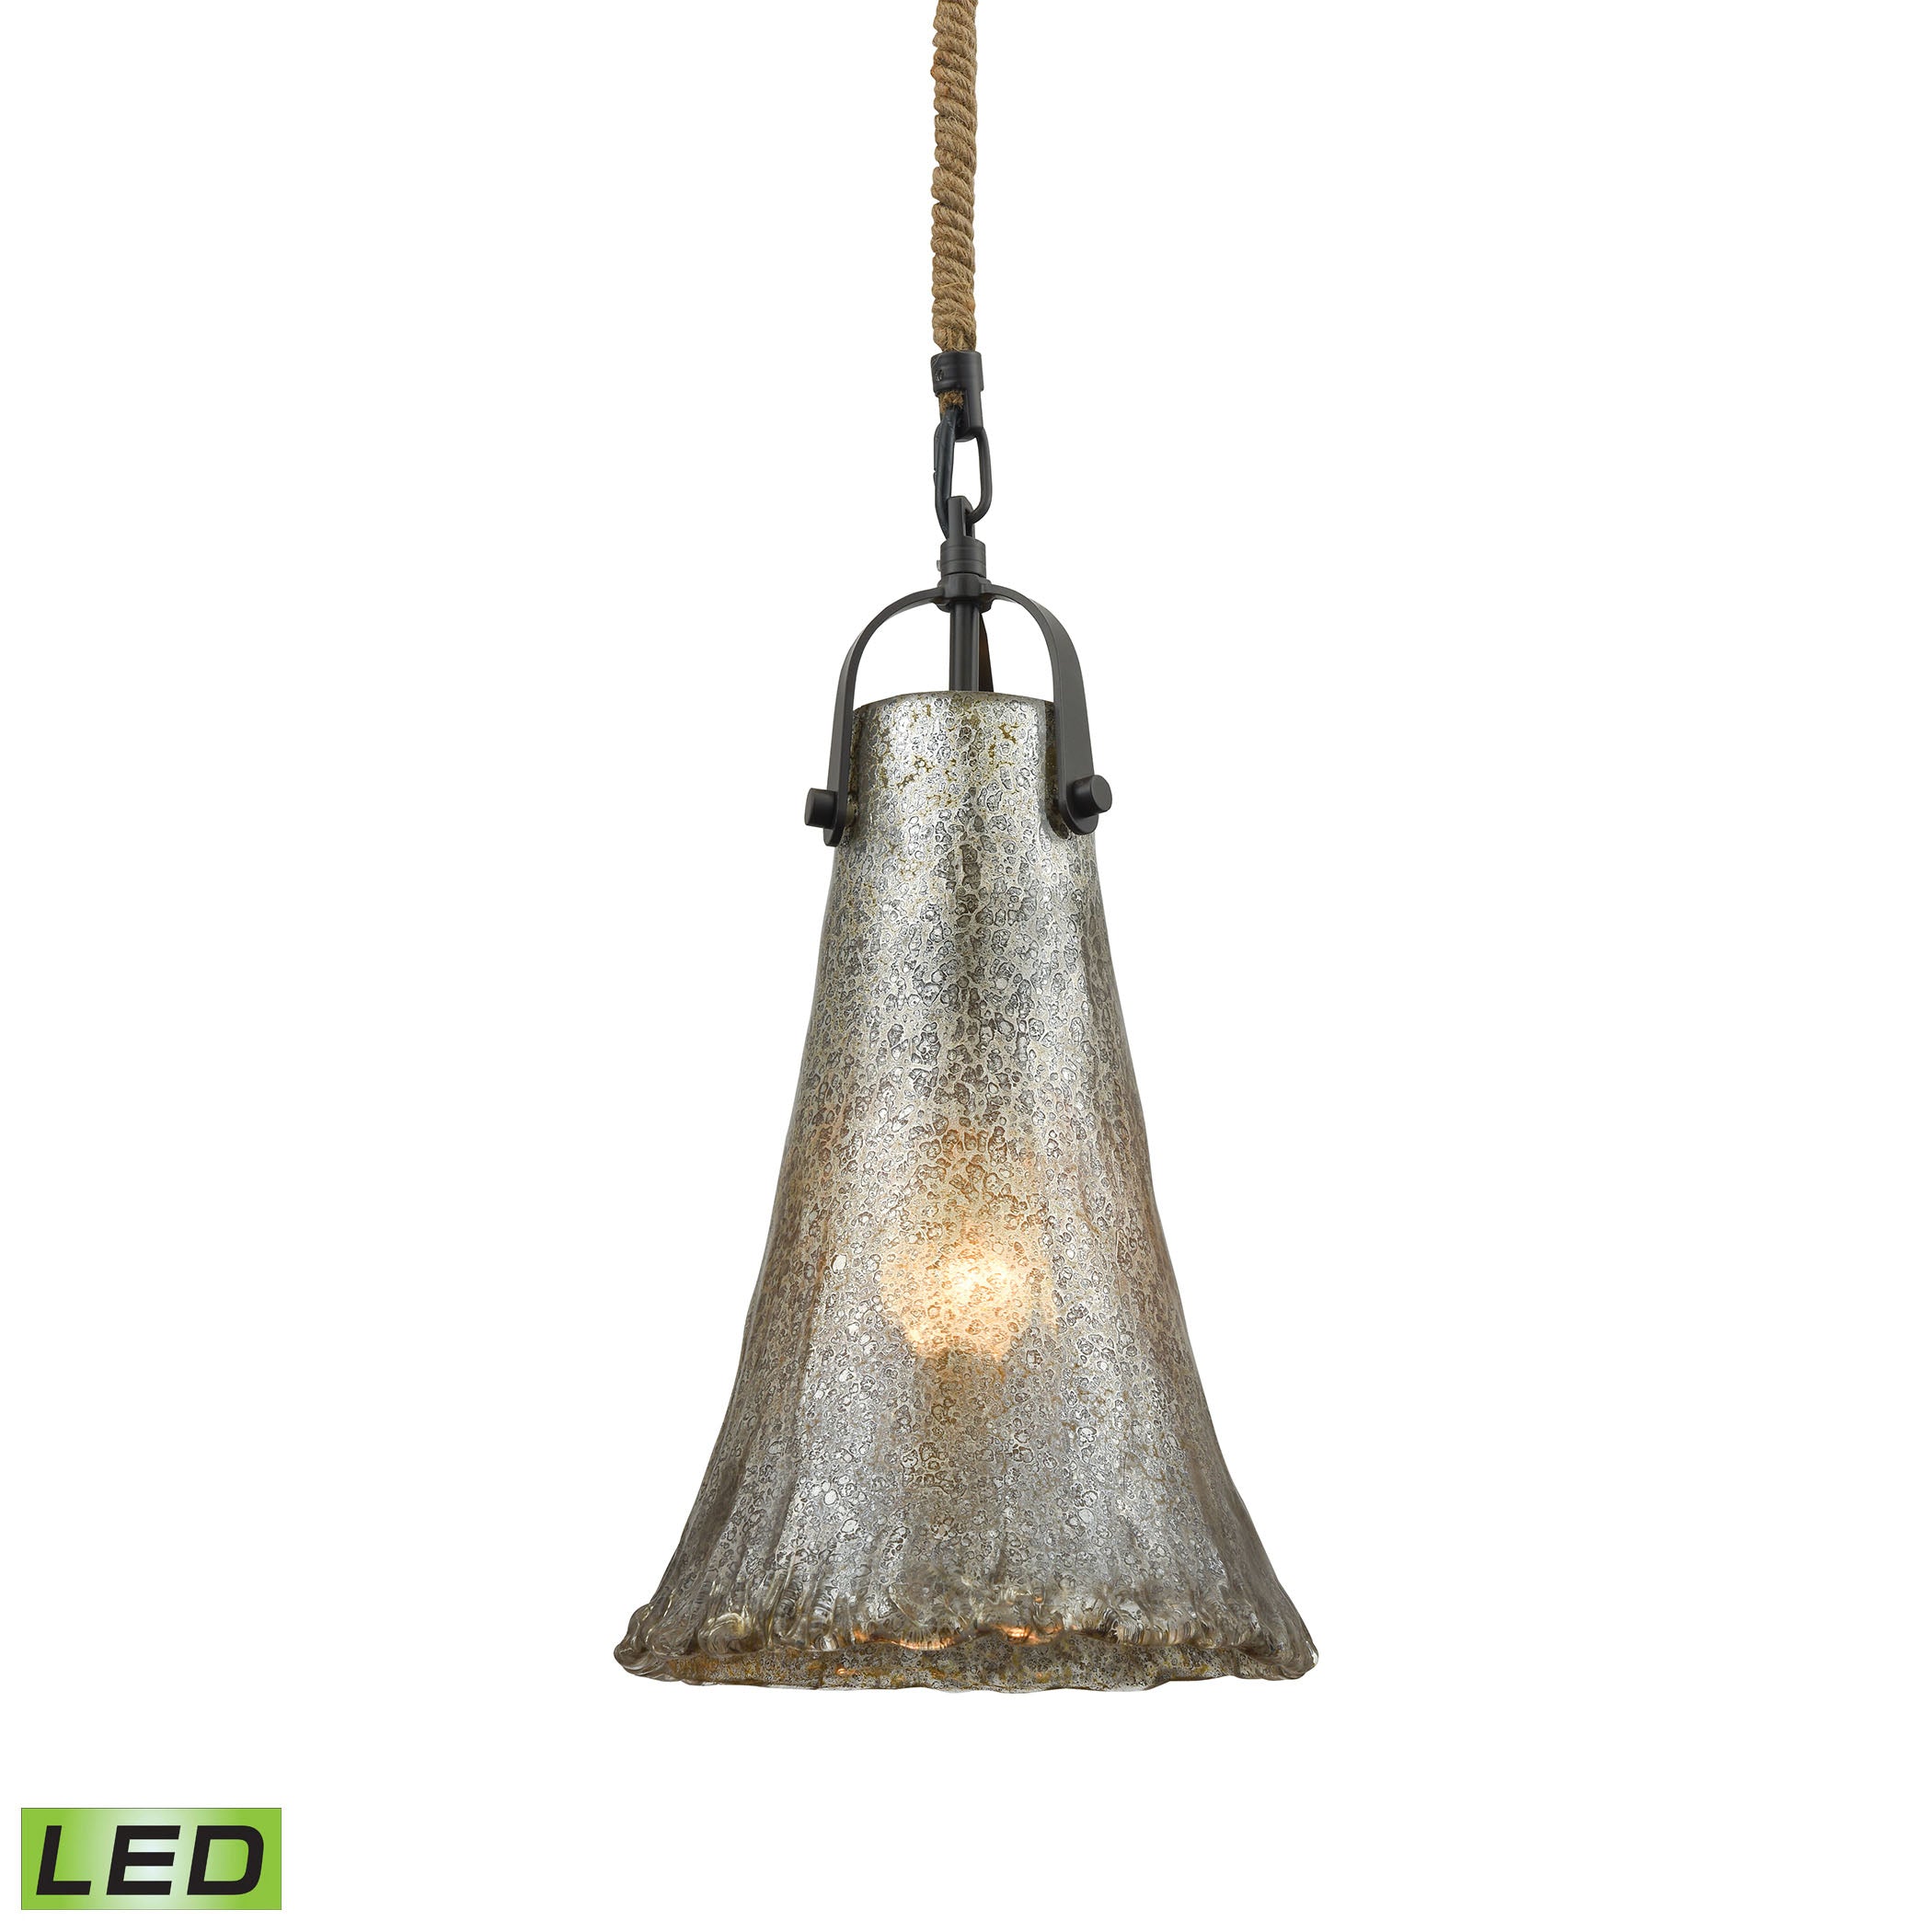 ELK Lighting 10651/1-LED Hand Formed Glass 1-Light Mini Pendant in Oiled Bronze with Mercury Glass - Includes LED Bulb